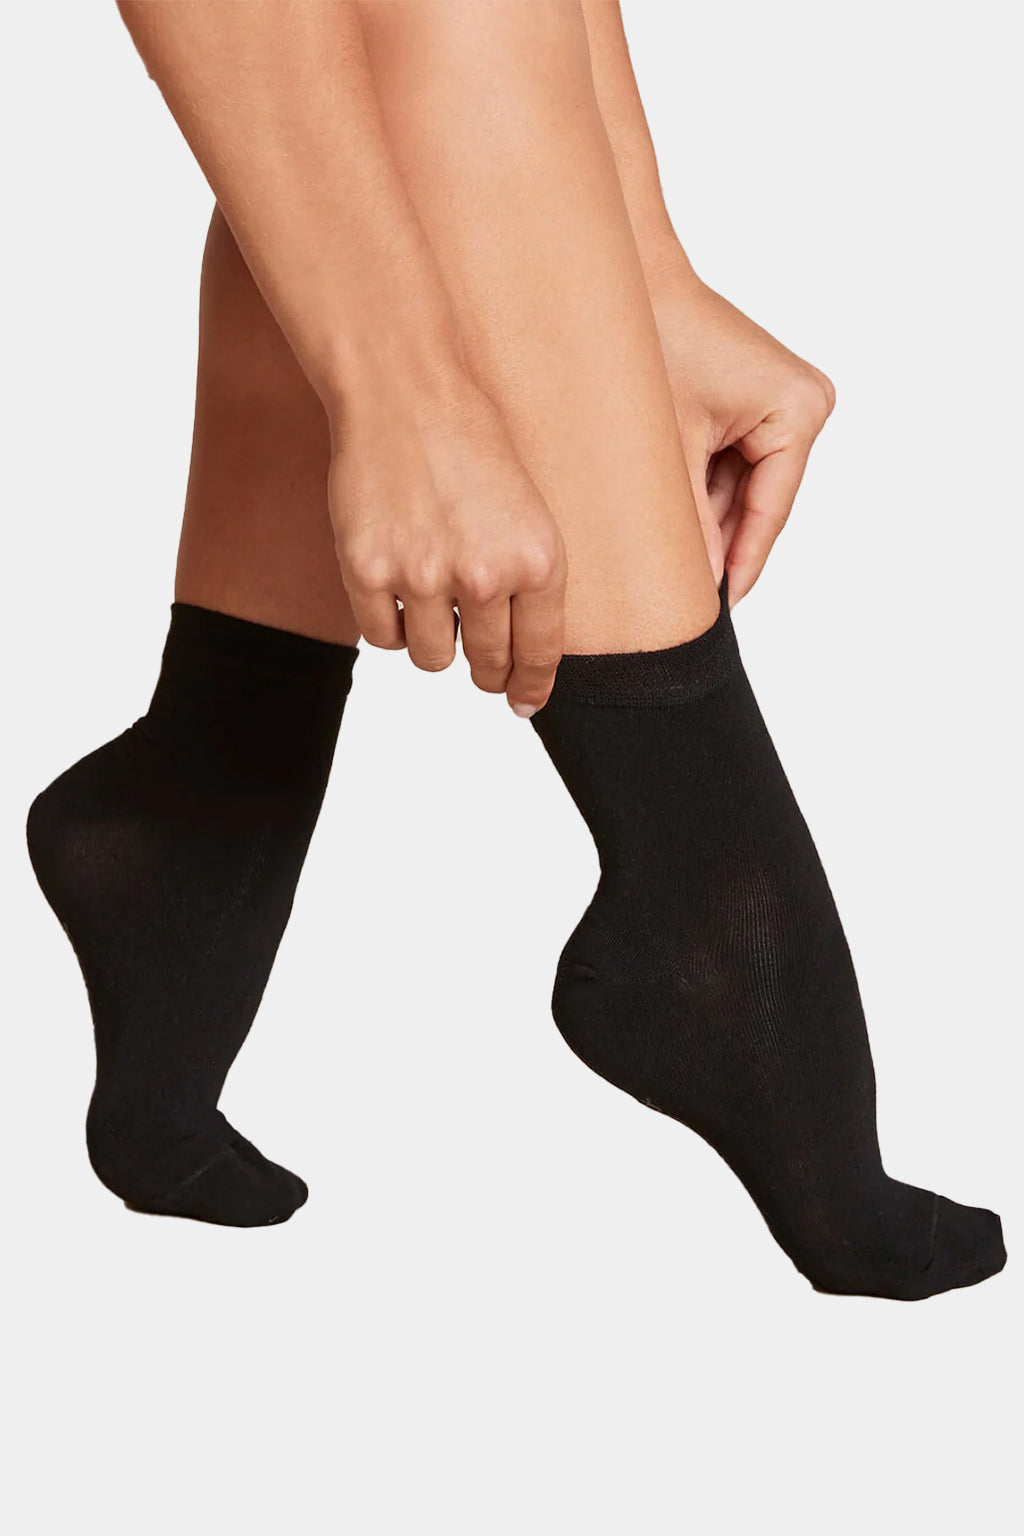 Boody - Women's Everyday Ankle Socks (Pairs of Three)